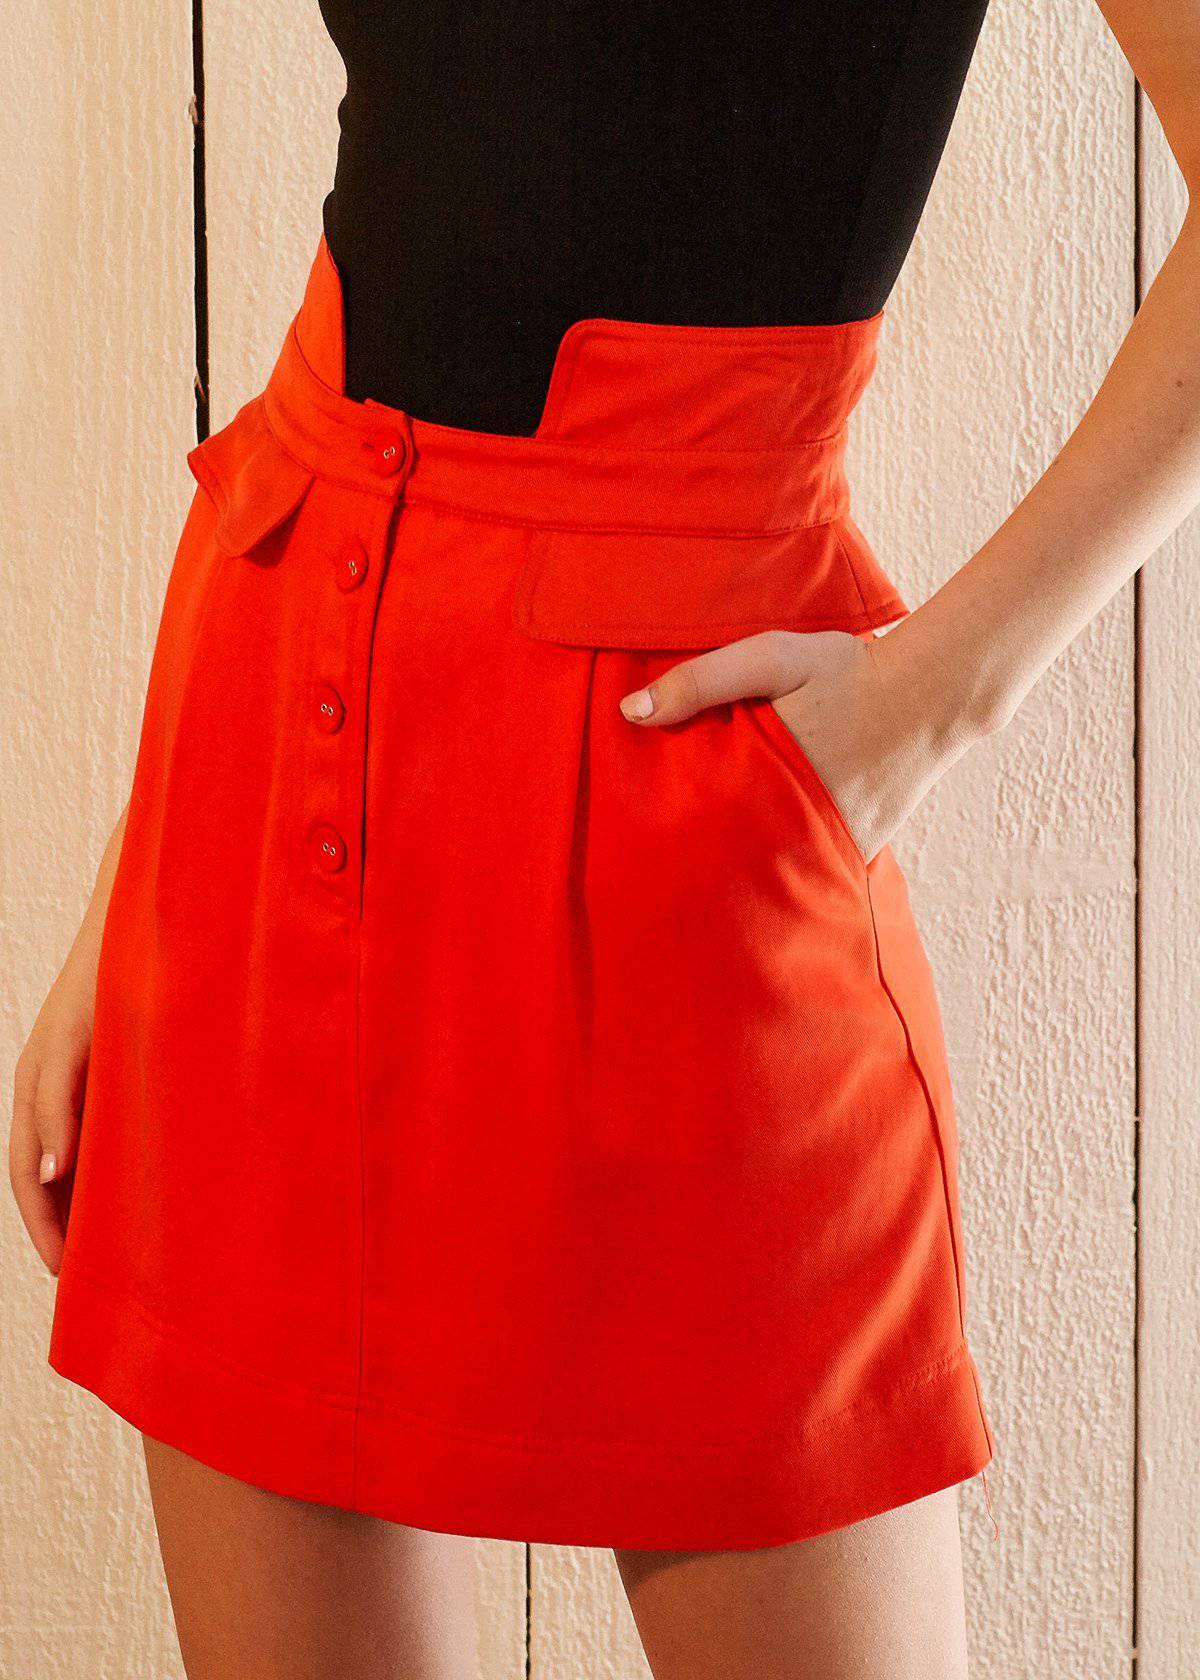 Women's High Waisted Utility Skirt in Poppy by Shop at Konus